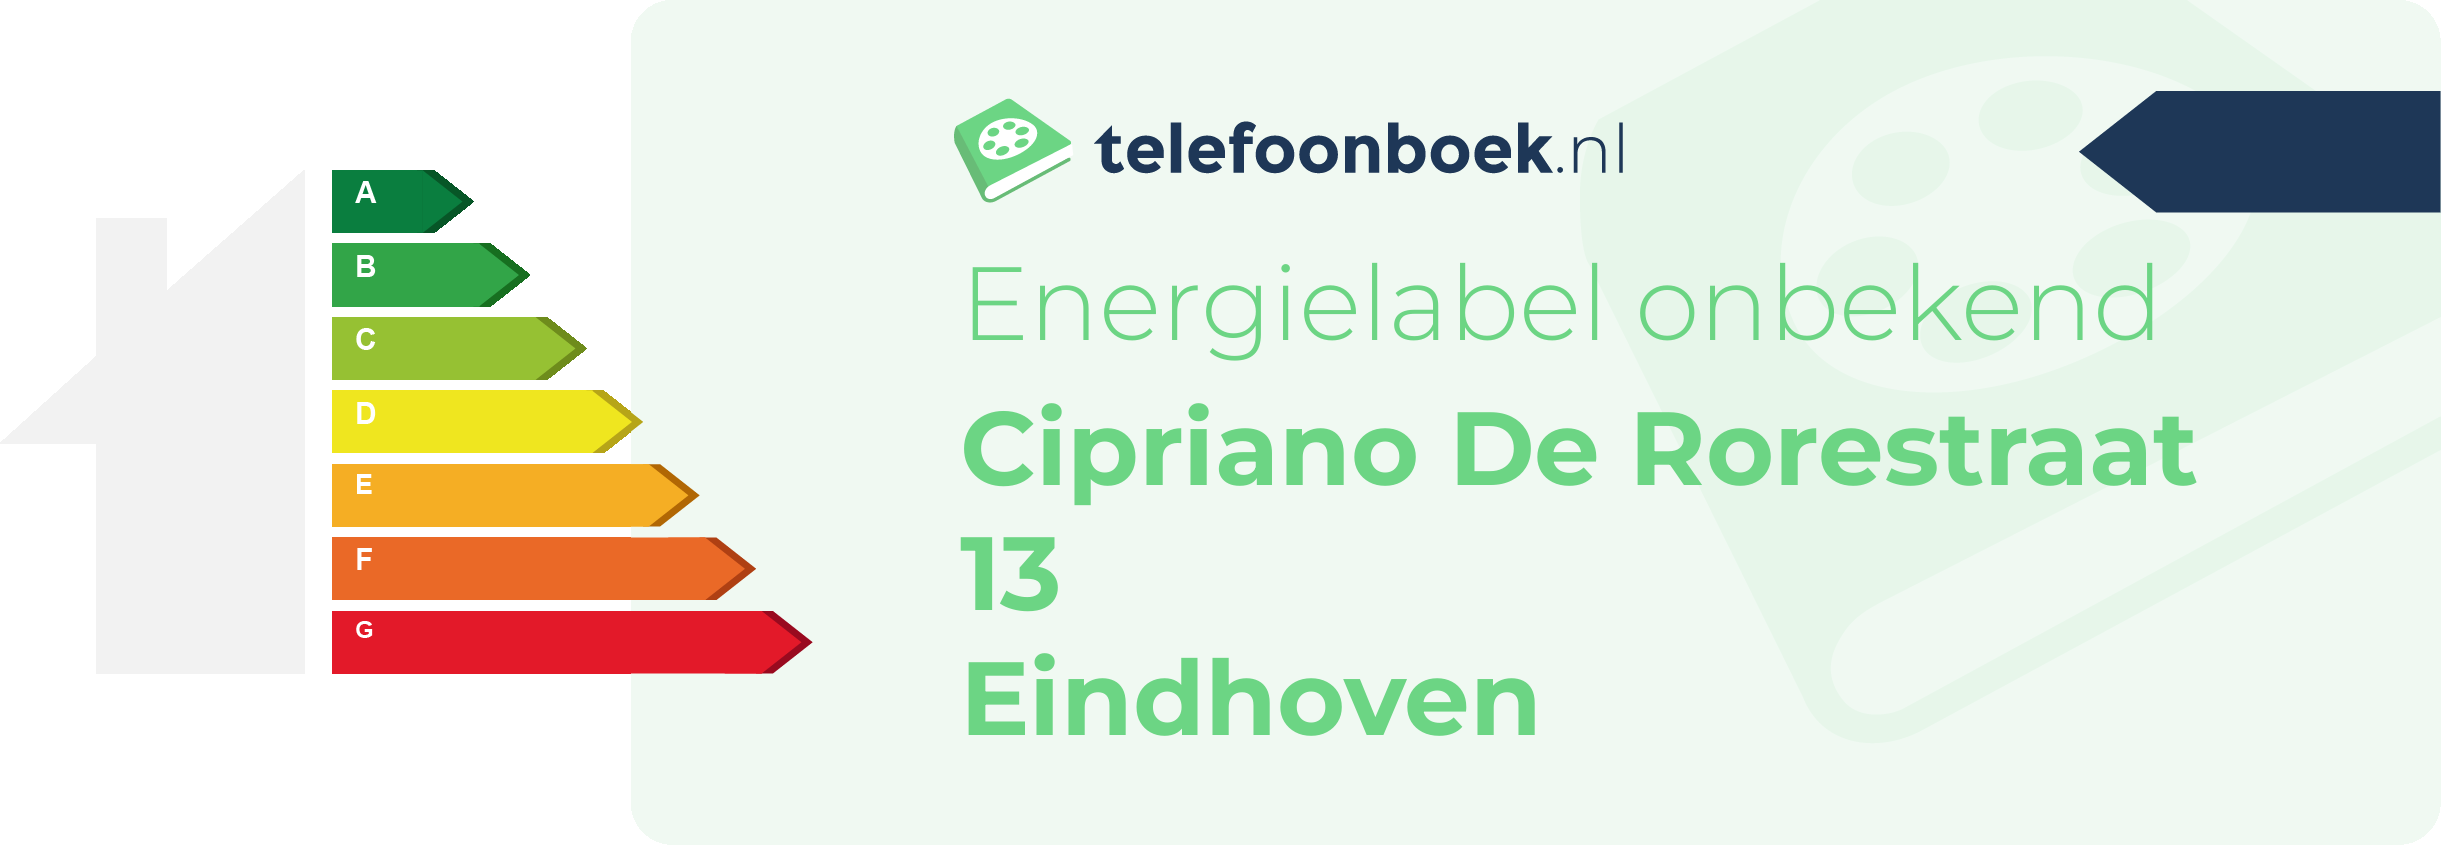 Energielabel Cipriano De Rorestraat 13 Eindhoven